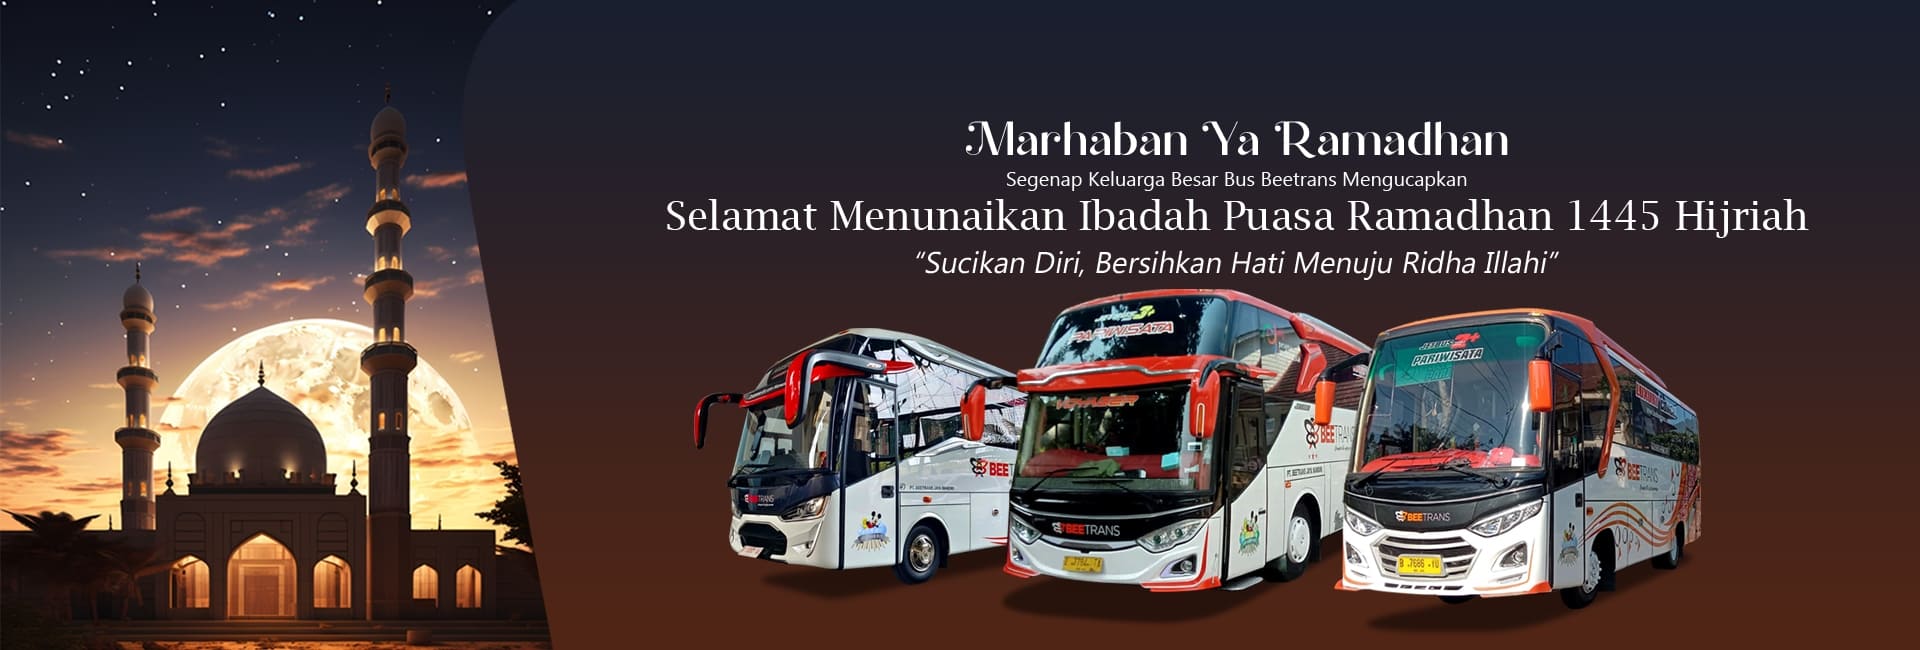 Ramadhan 1445 H Bus Beetrans